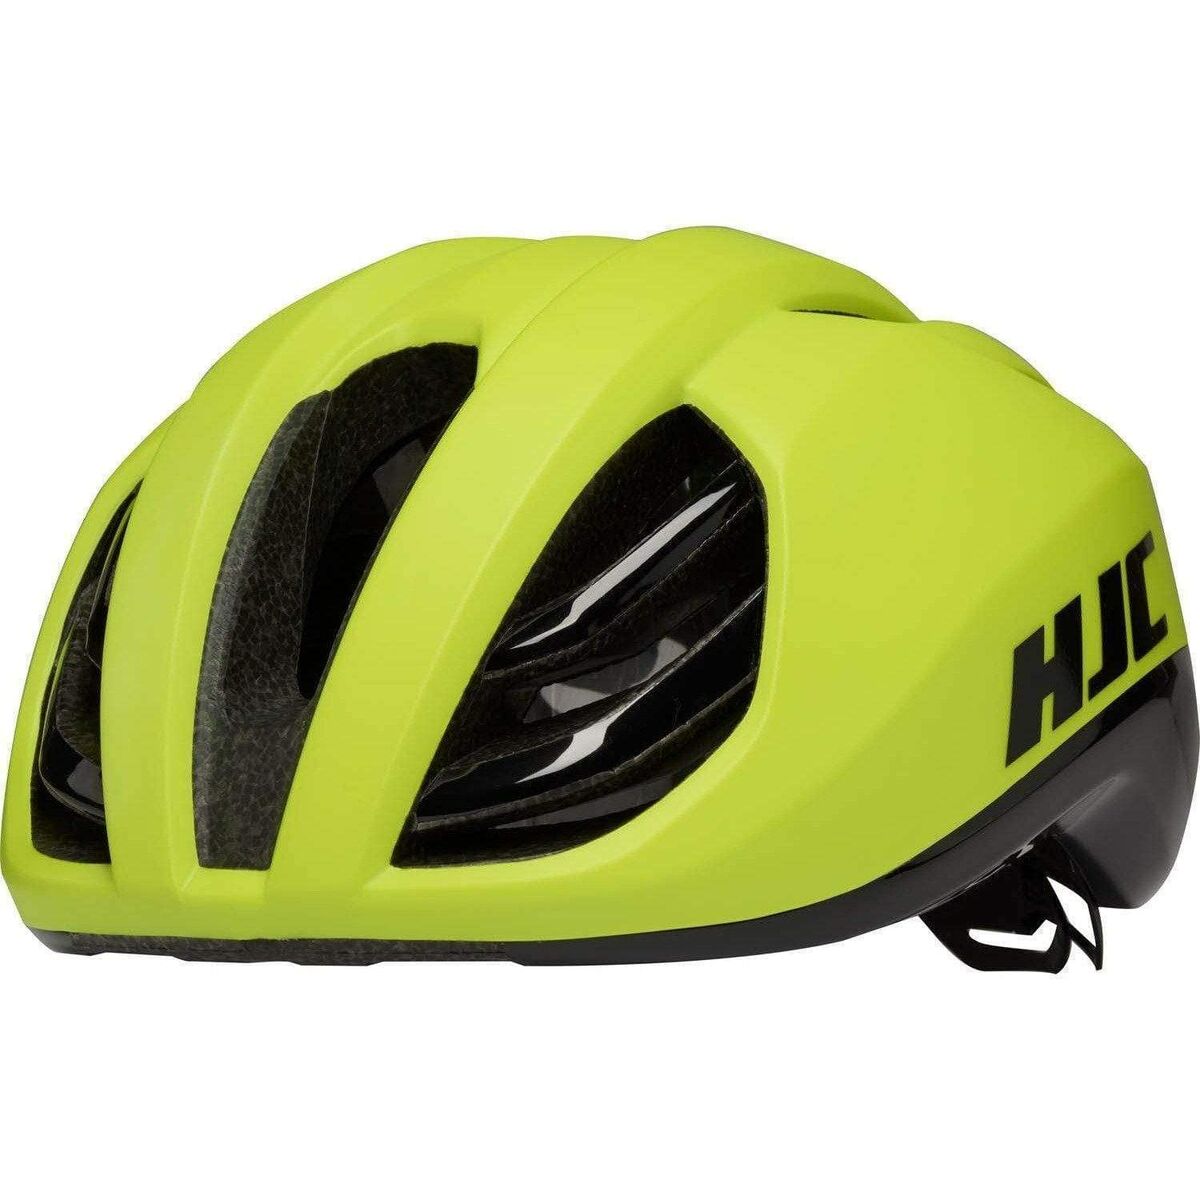 Adult's Cycling Helmet HJC Stradale 58-61 cm (Refurbished A)